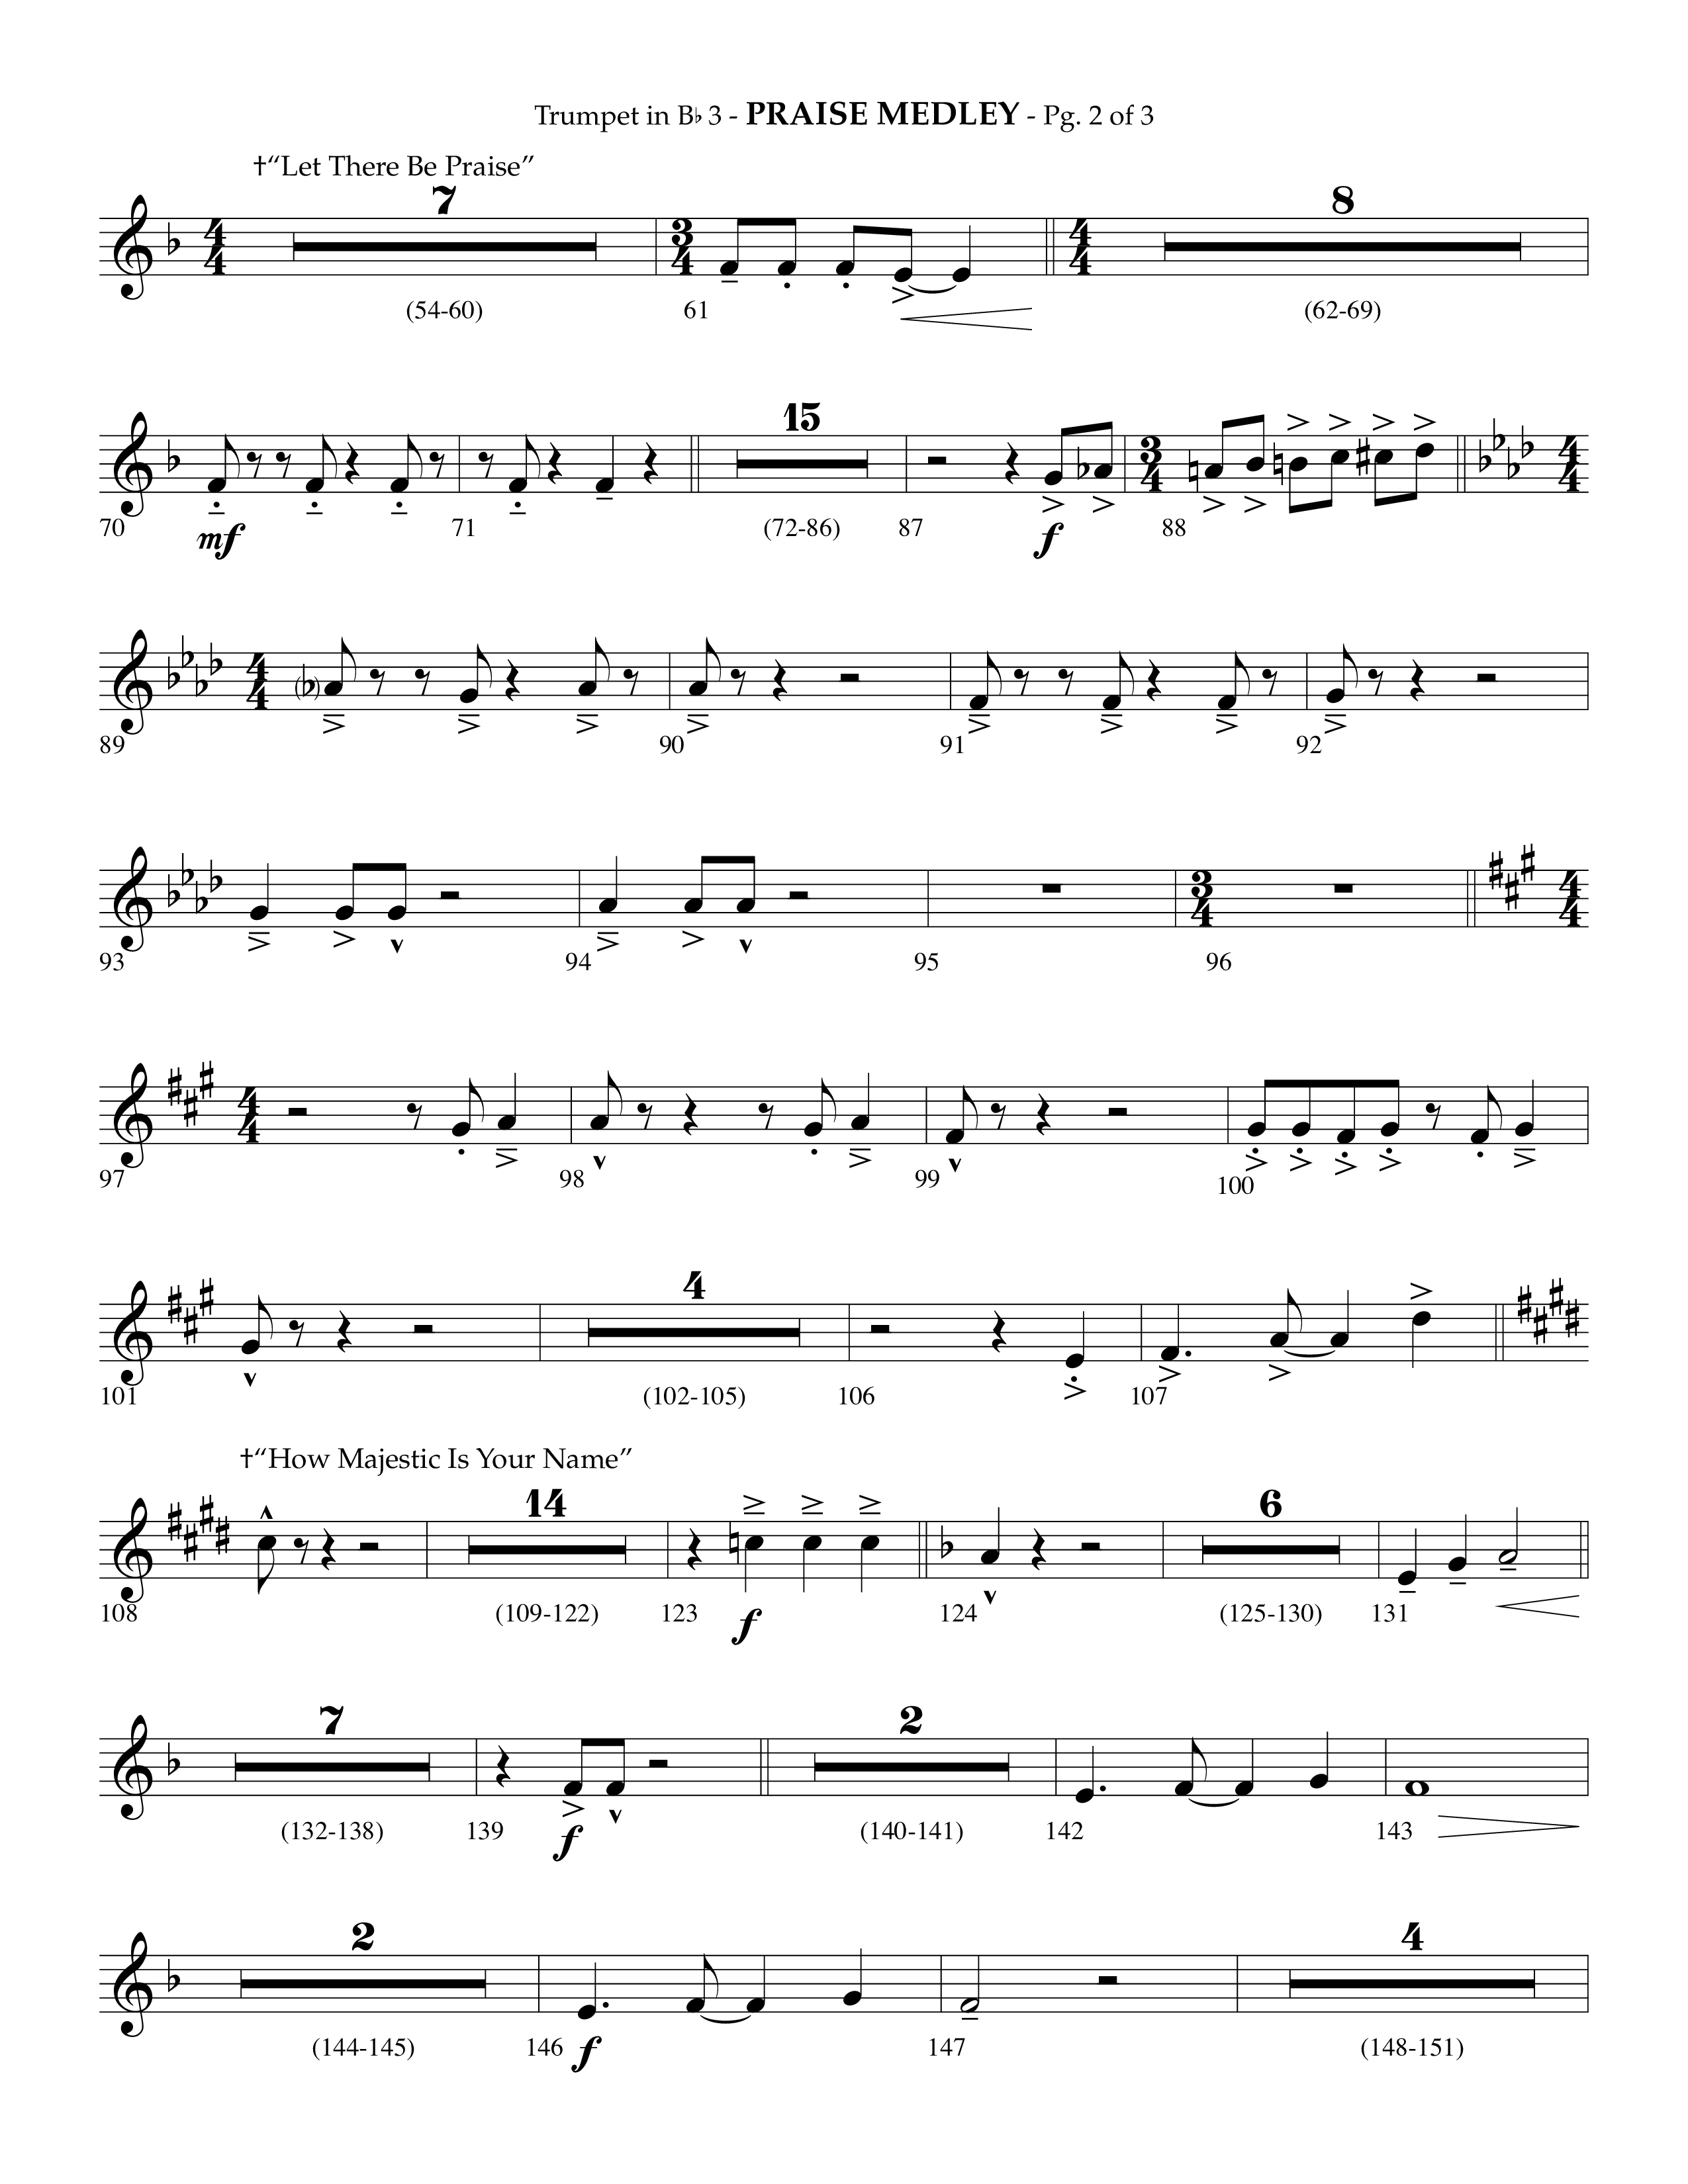 Praise Medley (Choral Anthem SATB) Trumpet 3 (Lifeway Choral / Arr. Phillip Keveren / Arr. Jay Rouse)